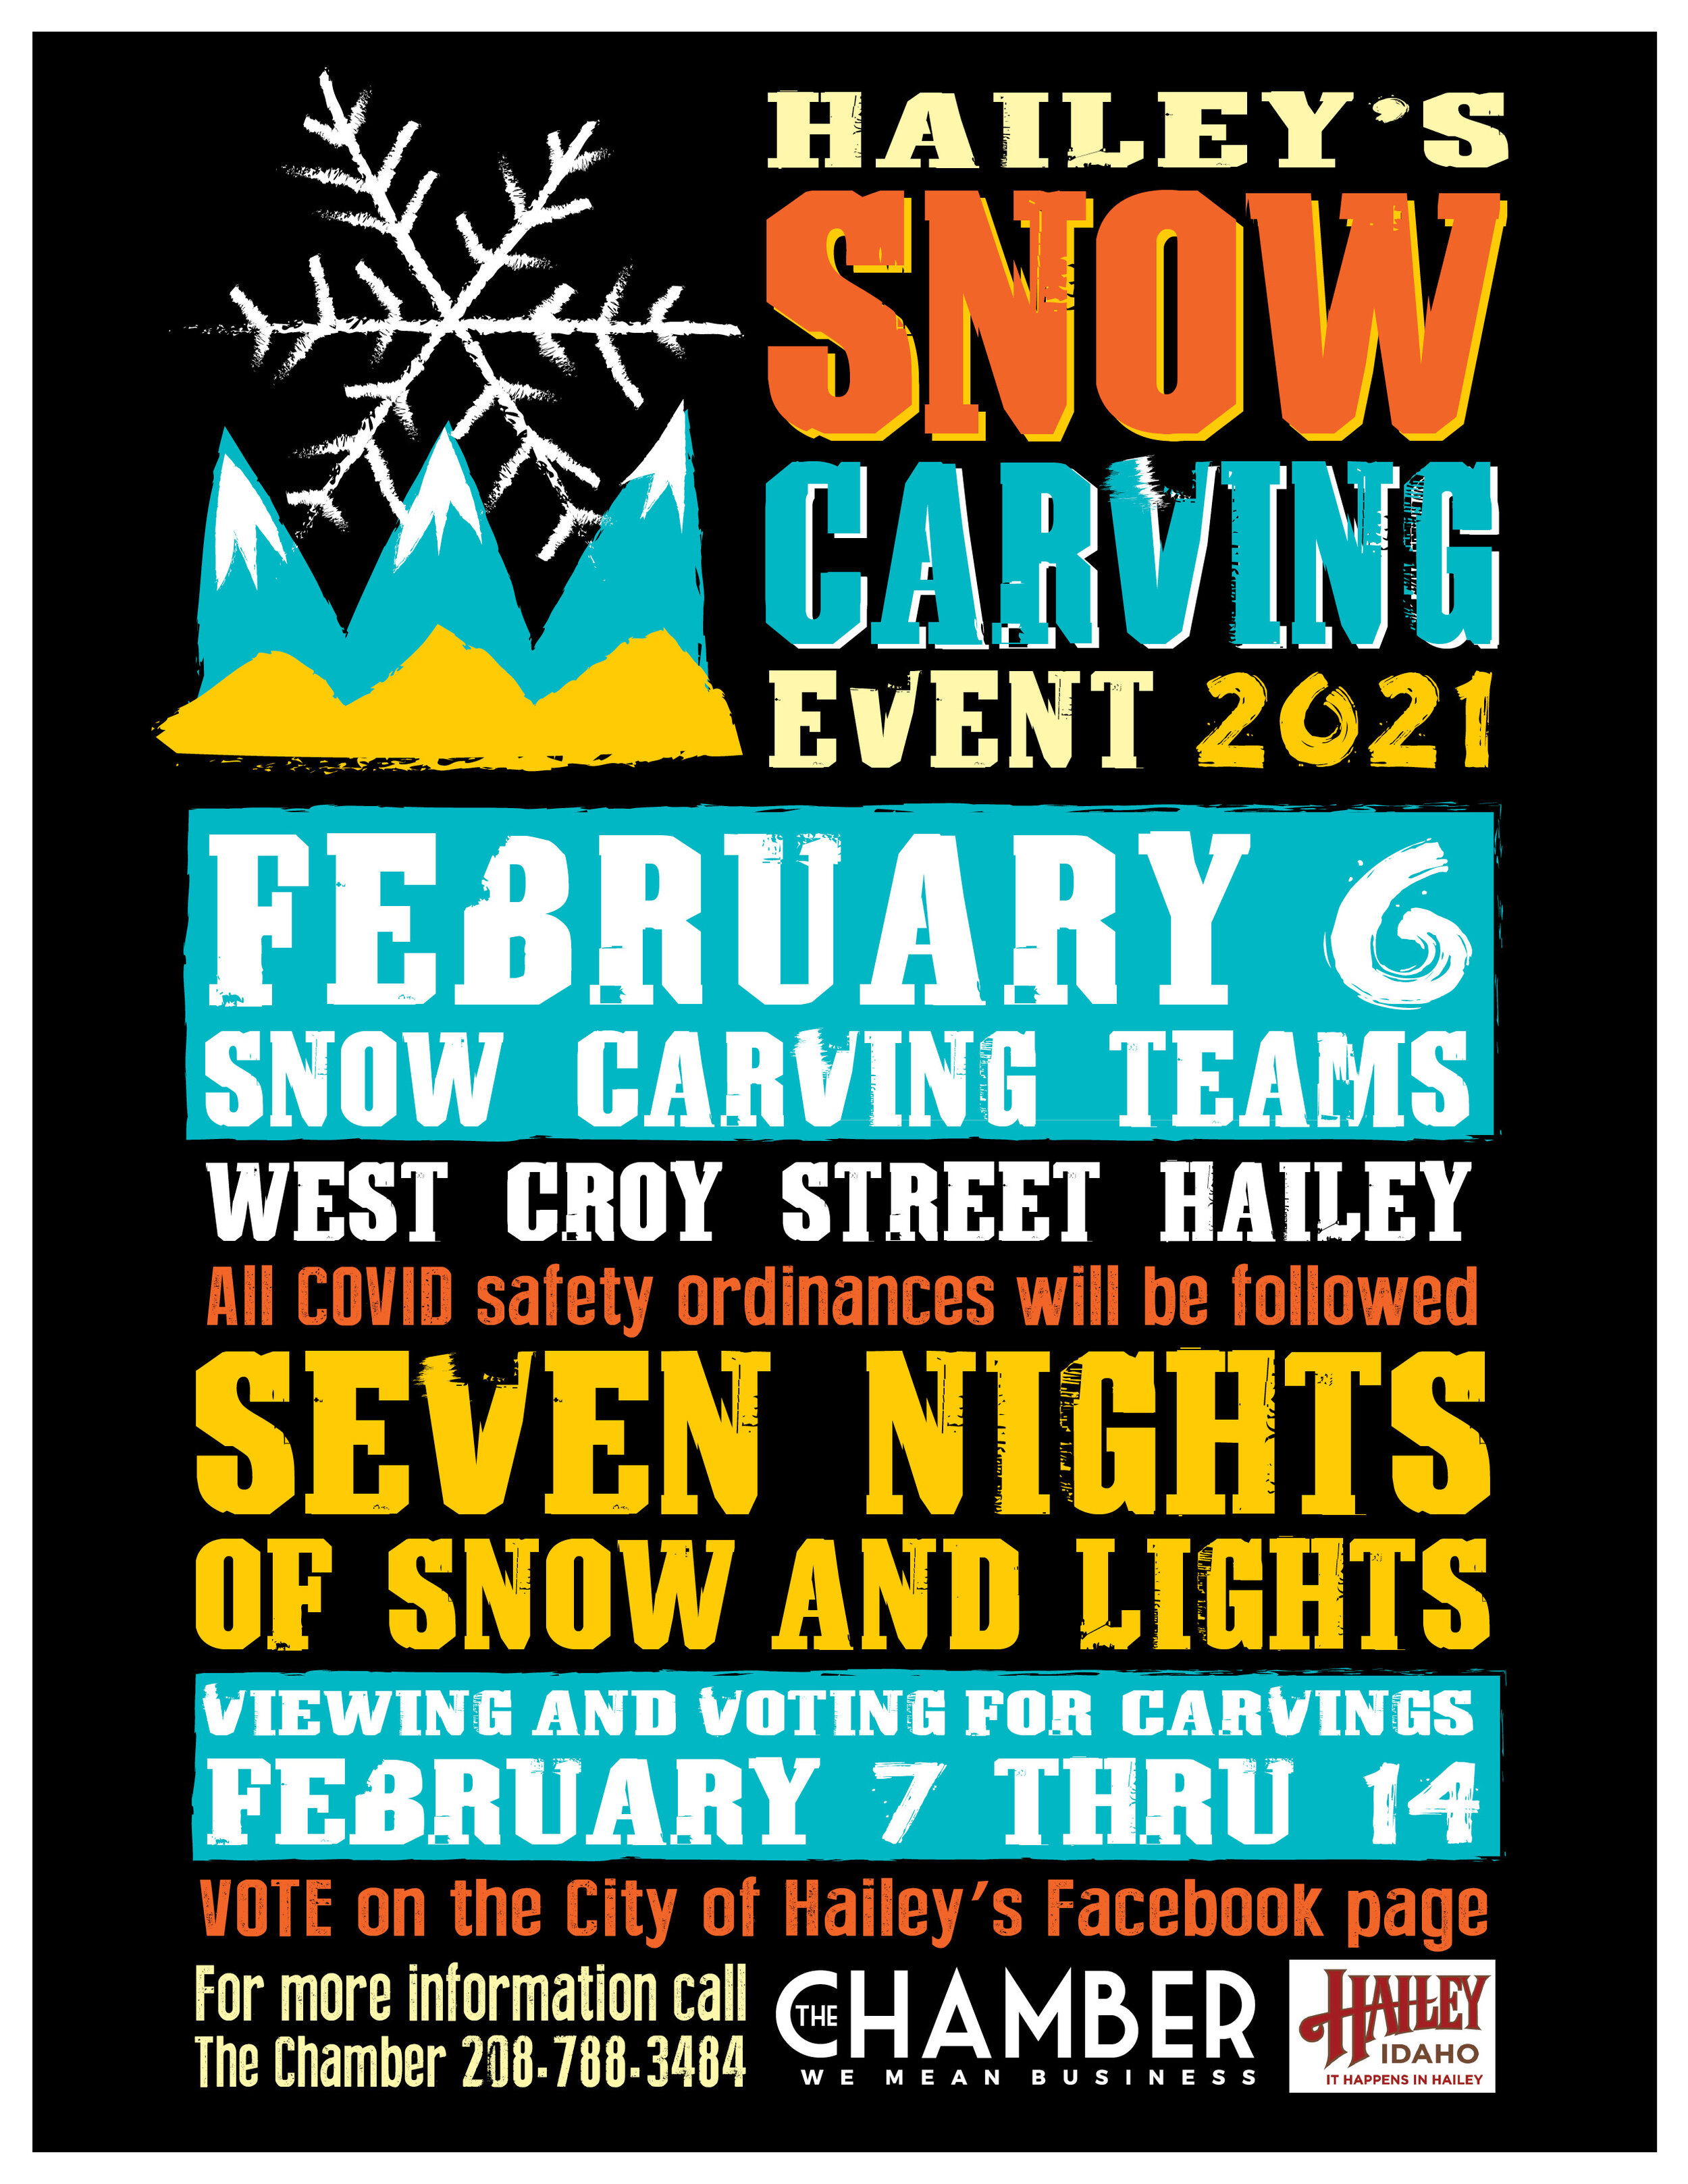 SnowCarvingEvent2021 flyer.jpg